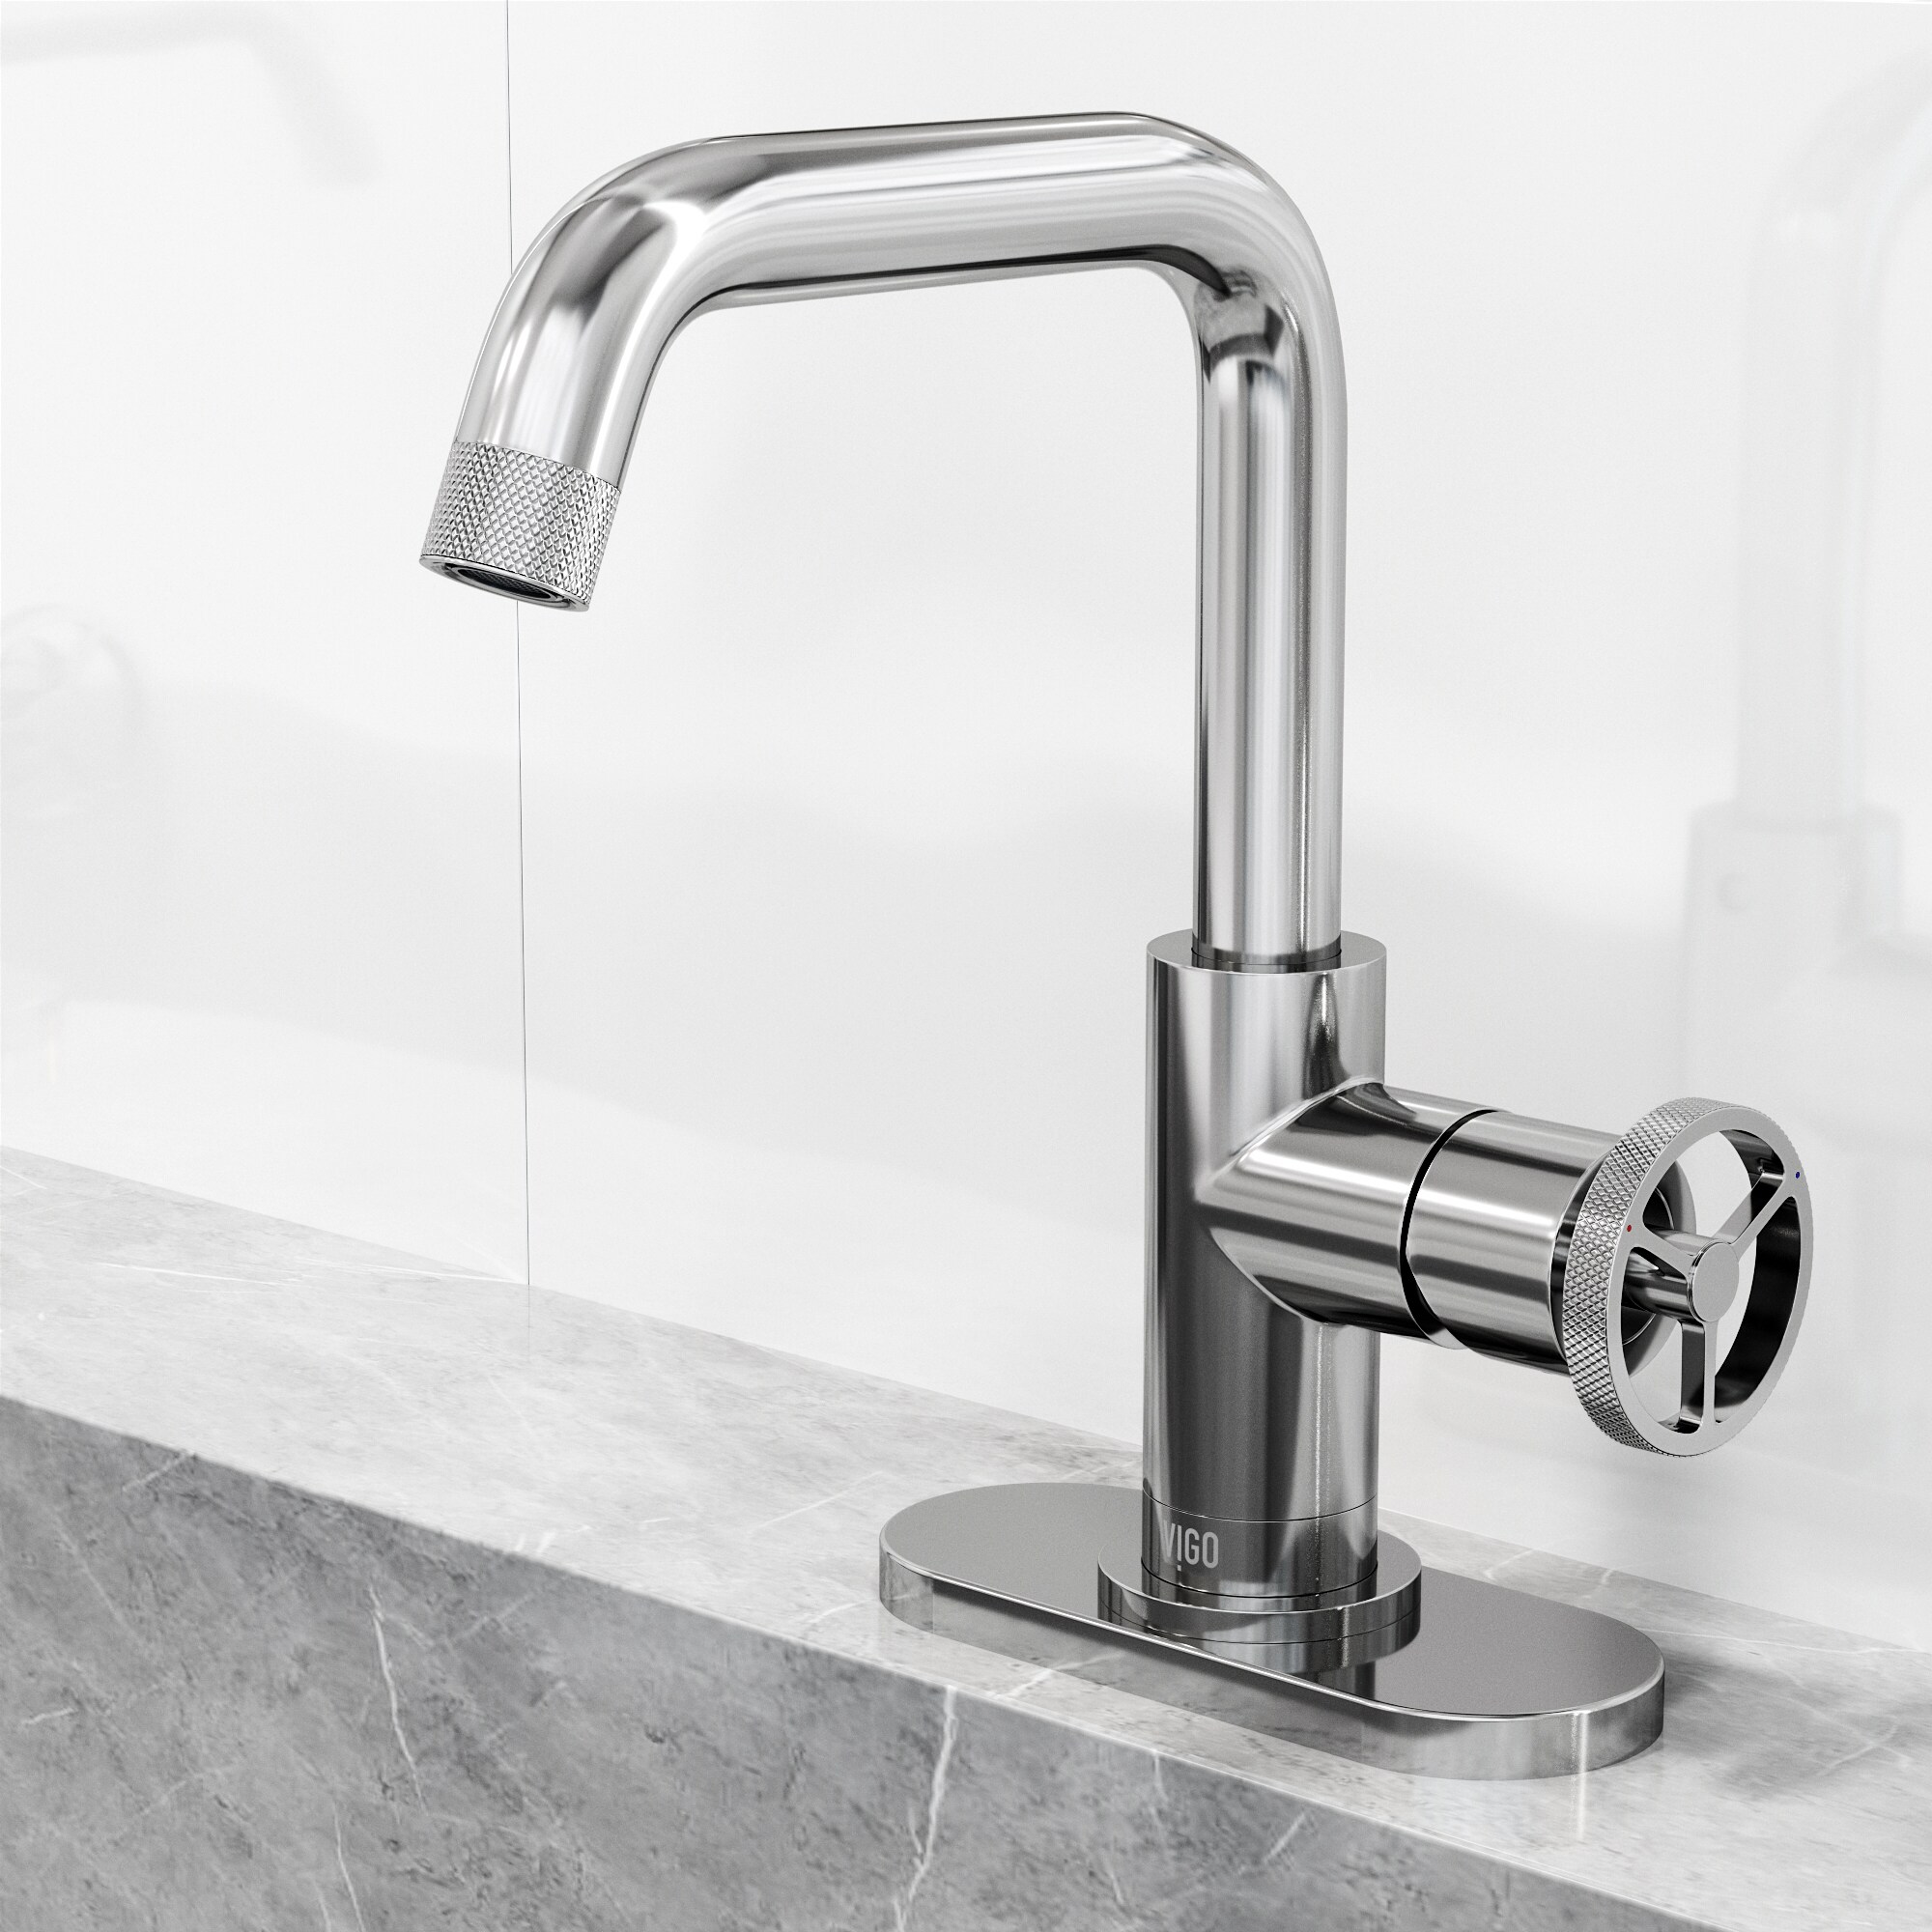 VIGO Cass Chrome 1-handle Single Hole WaterSense Low-arc Bathroom Sink Faucet with Deck Plate